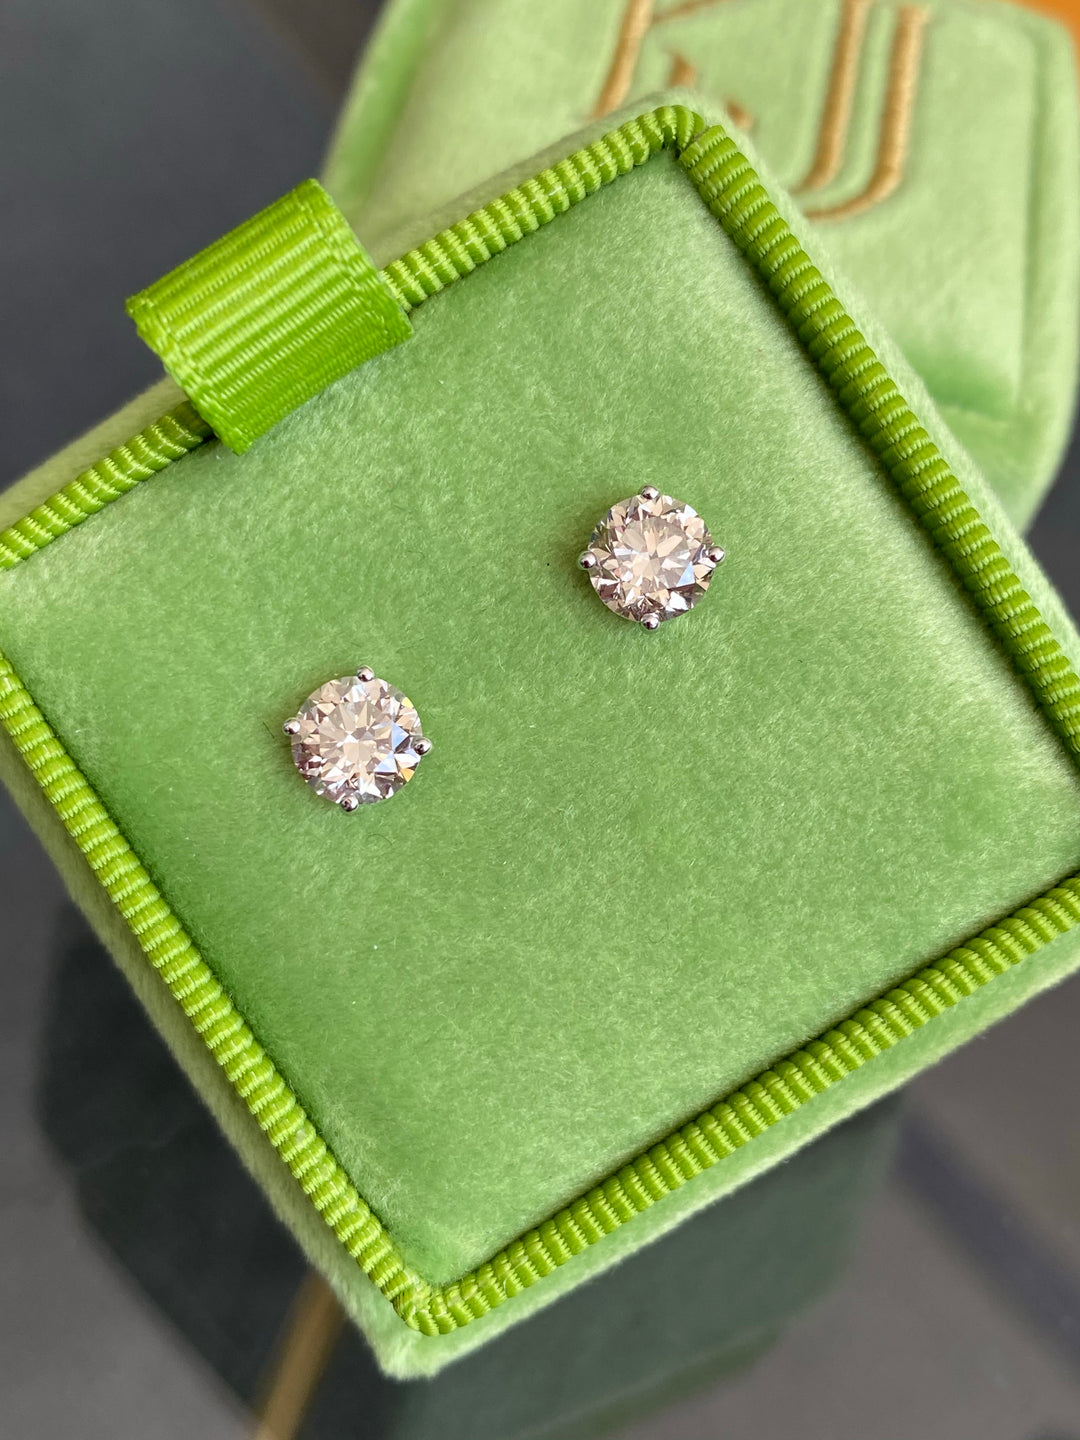 2 carat round brilliant cut diamond stud earrings in white gold